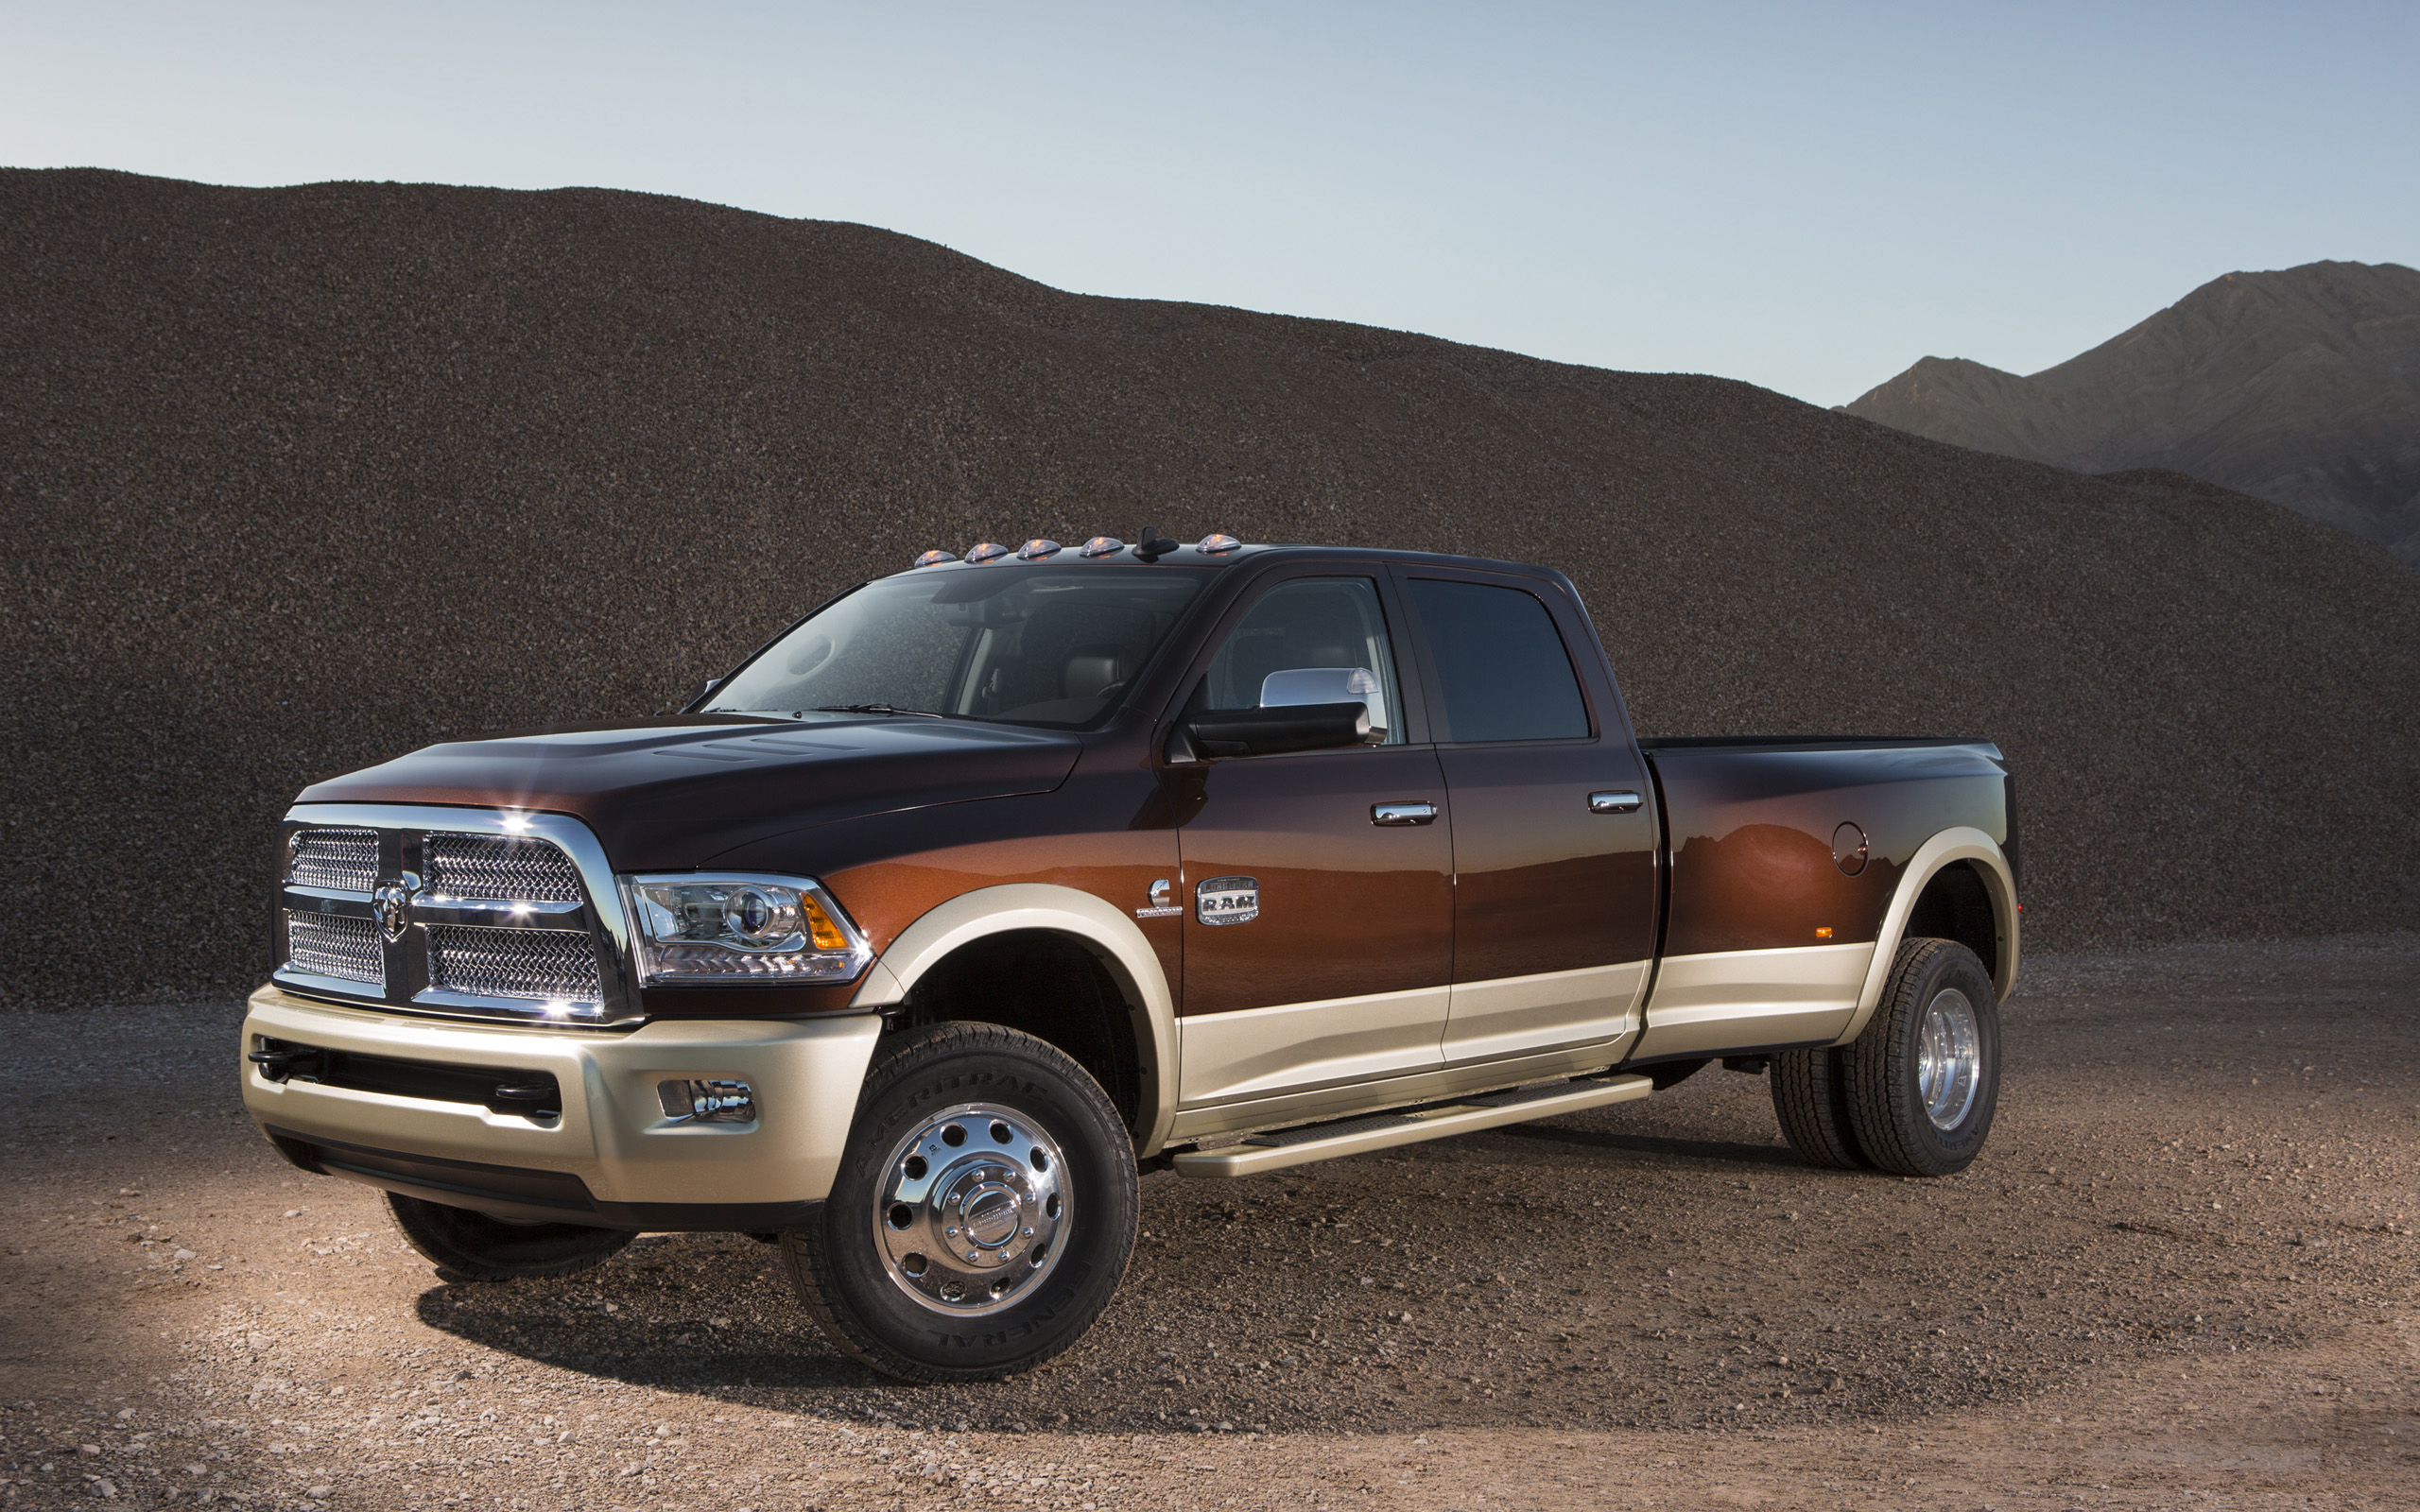 2013, Dodge, Ram, 3500, 4x4, Truck Wallpaper